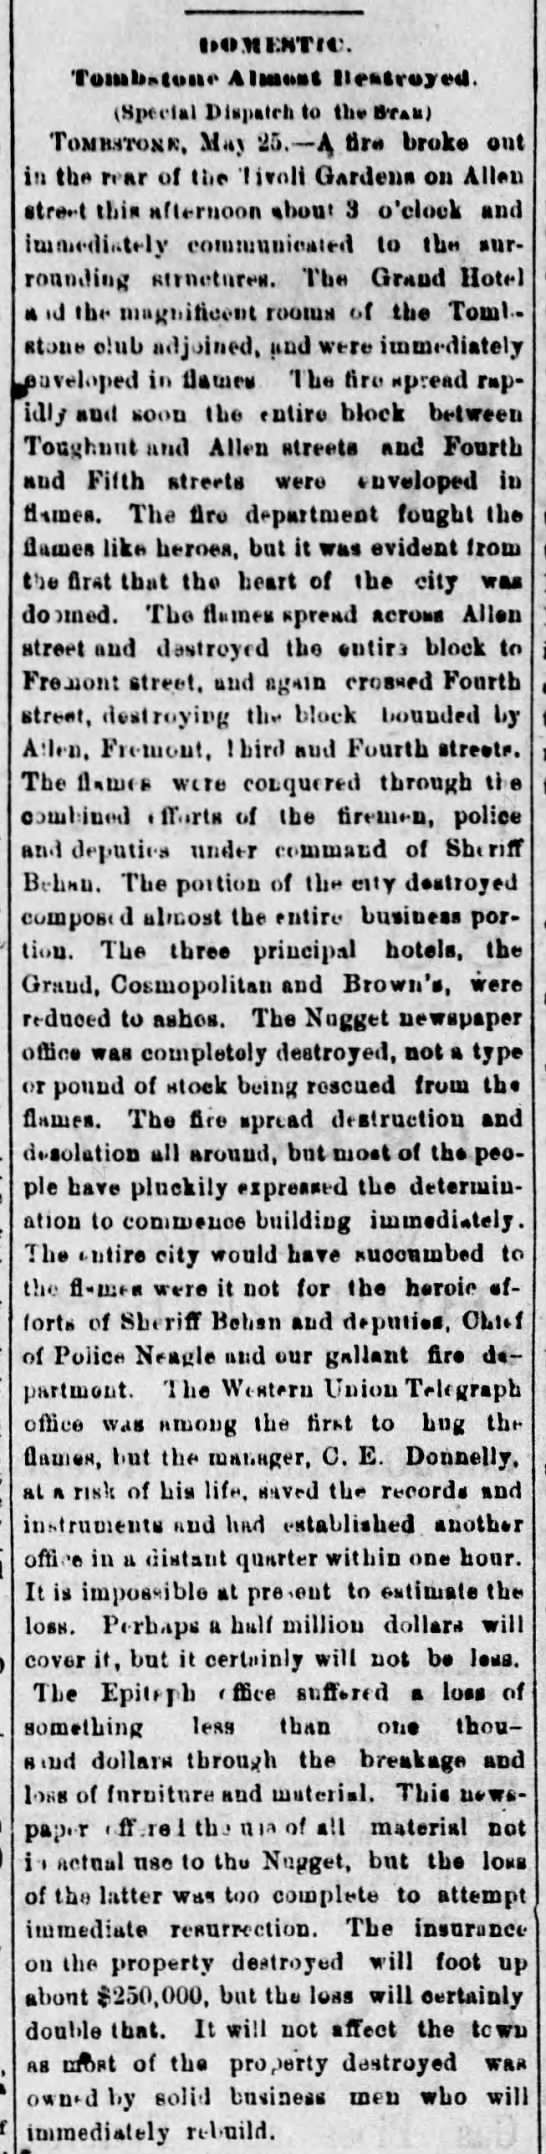 AZ Daily Star, Fri May 26, 1882 Pg 1 - 